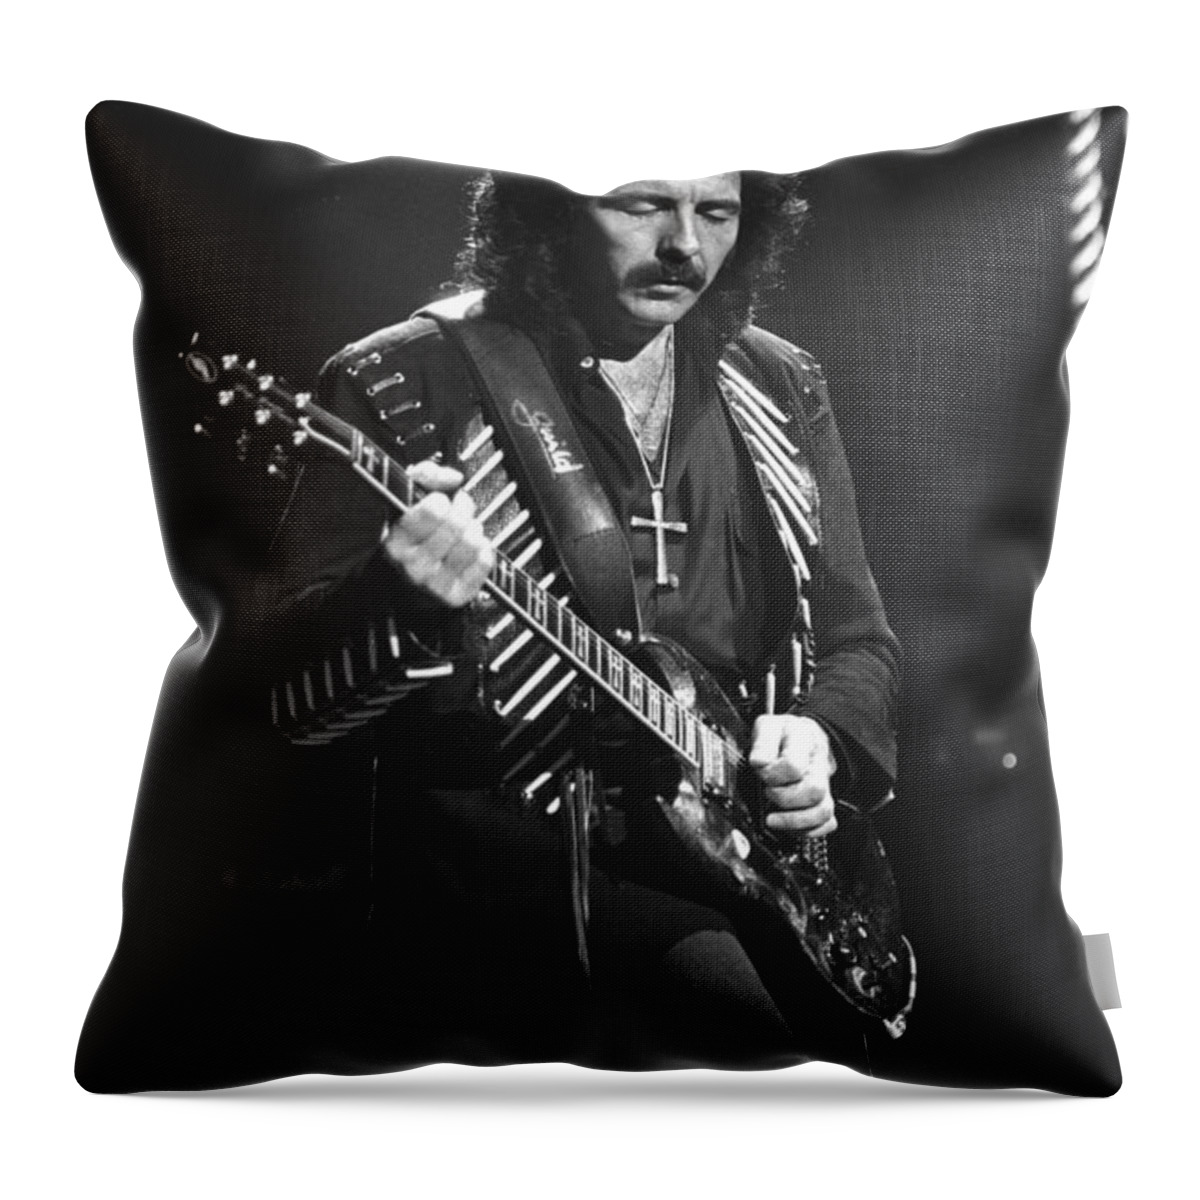 Black Sabbath Throw Pillow featuring the photograph Black Sabbath by Concert Photos